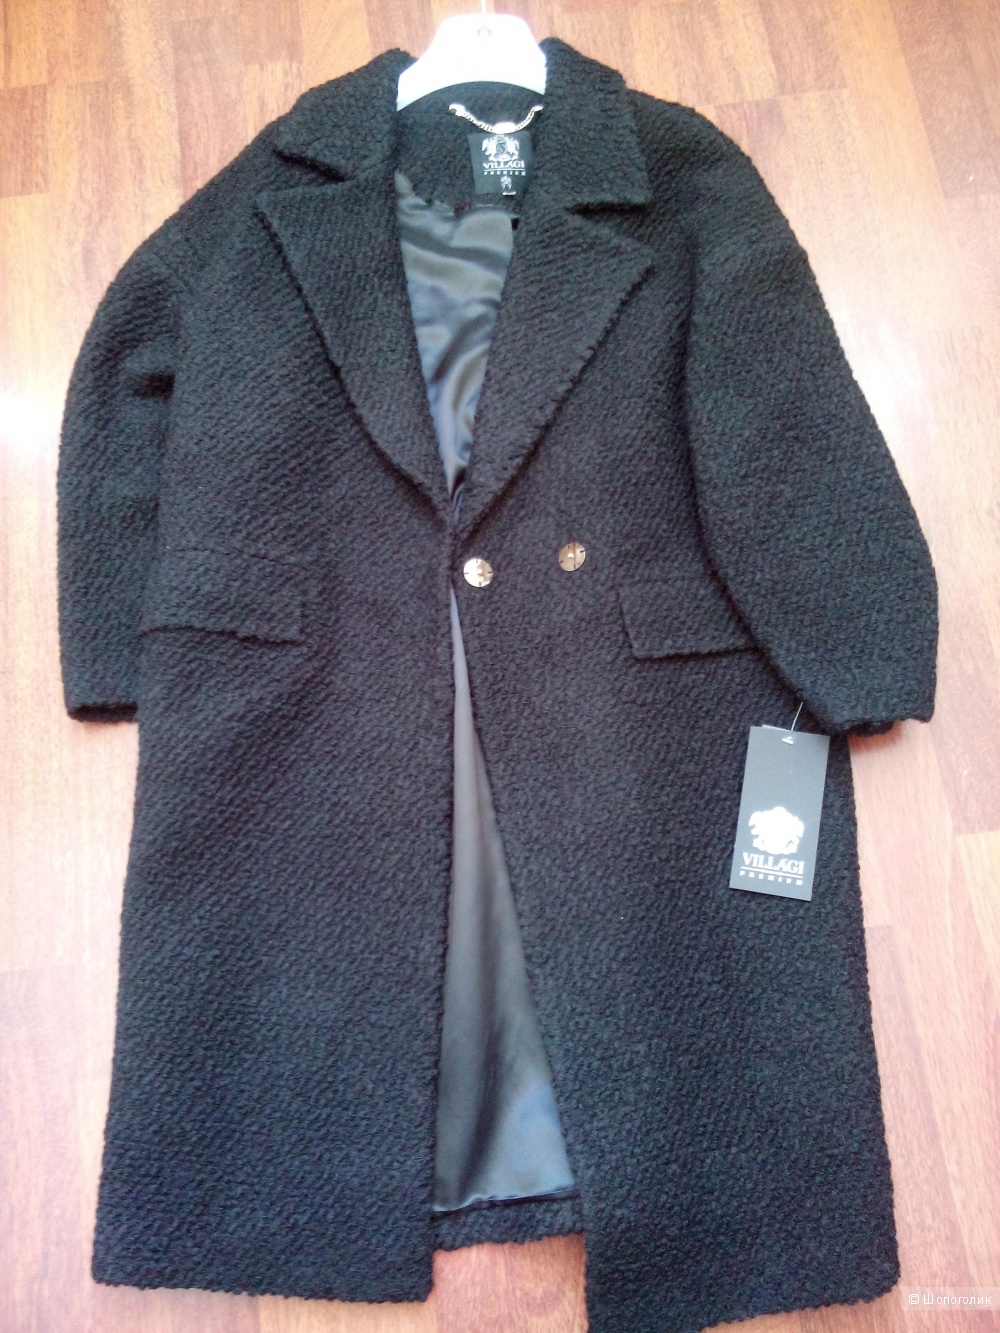 Пальто VILLAGI PREMIUM размер S.